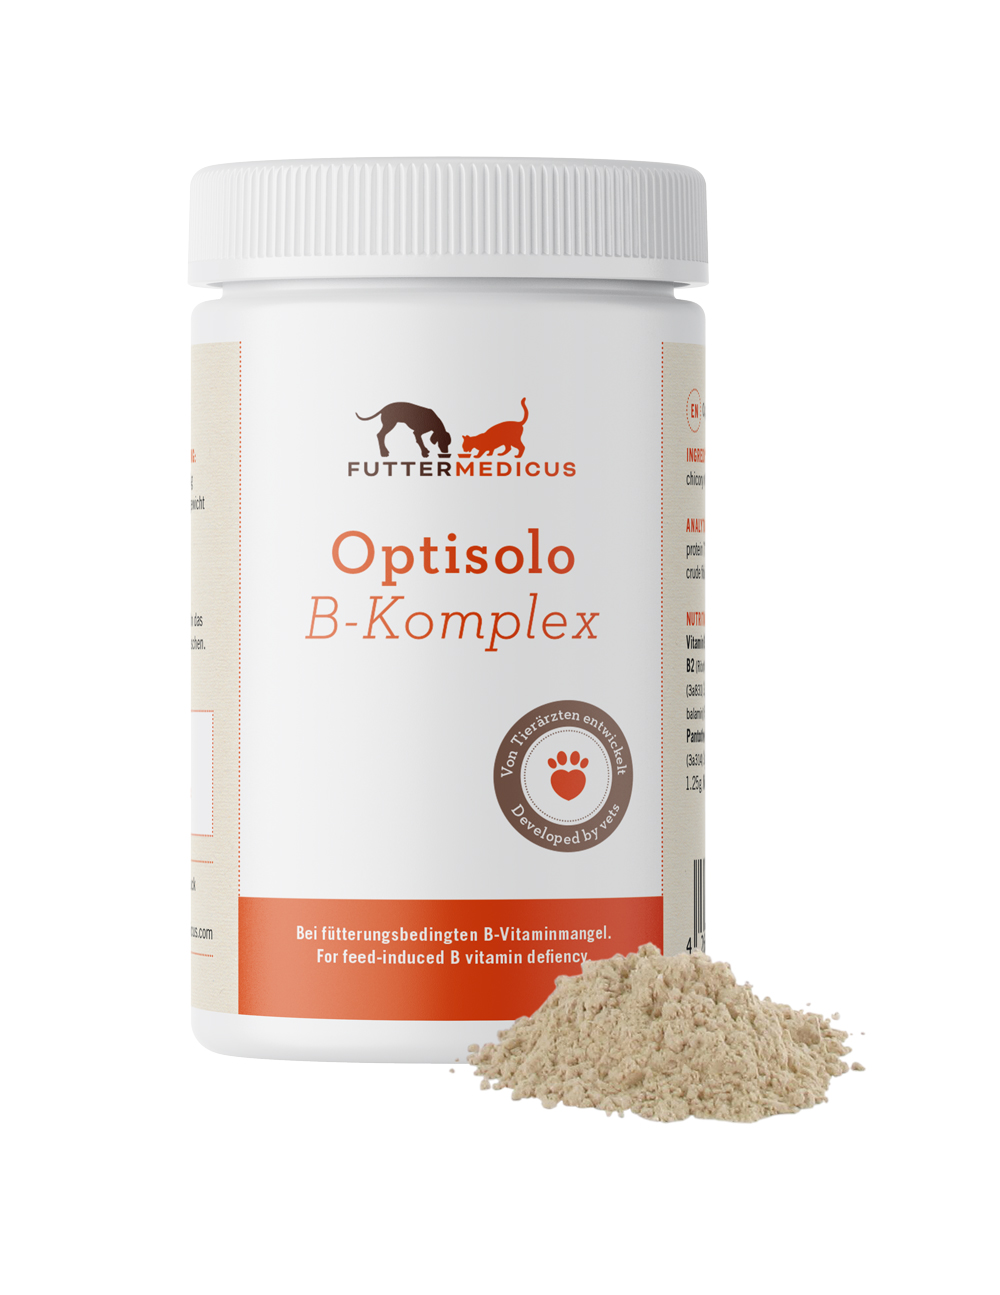 Optisolo B-Komplex 100g / Futtermedicus